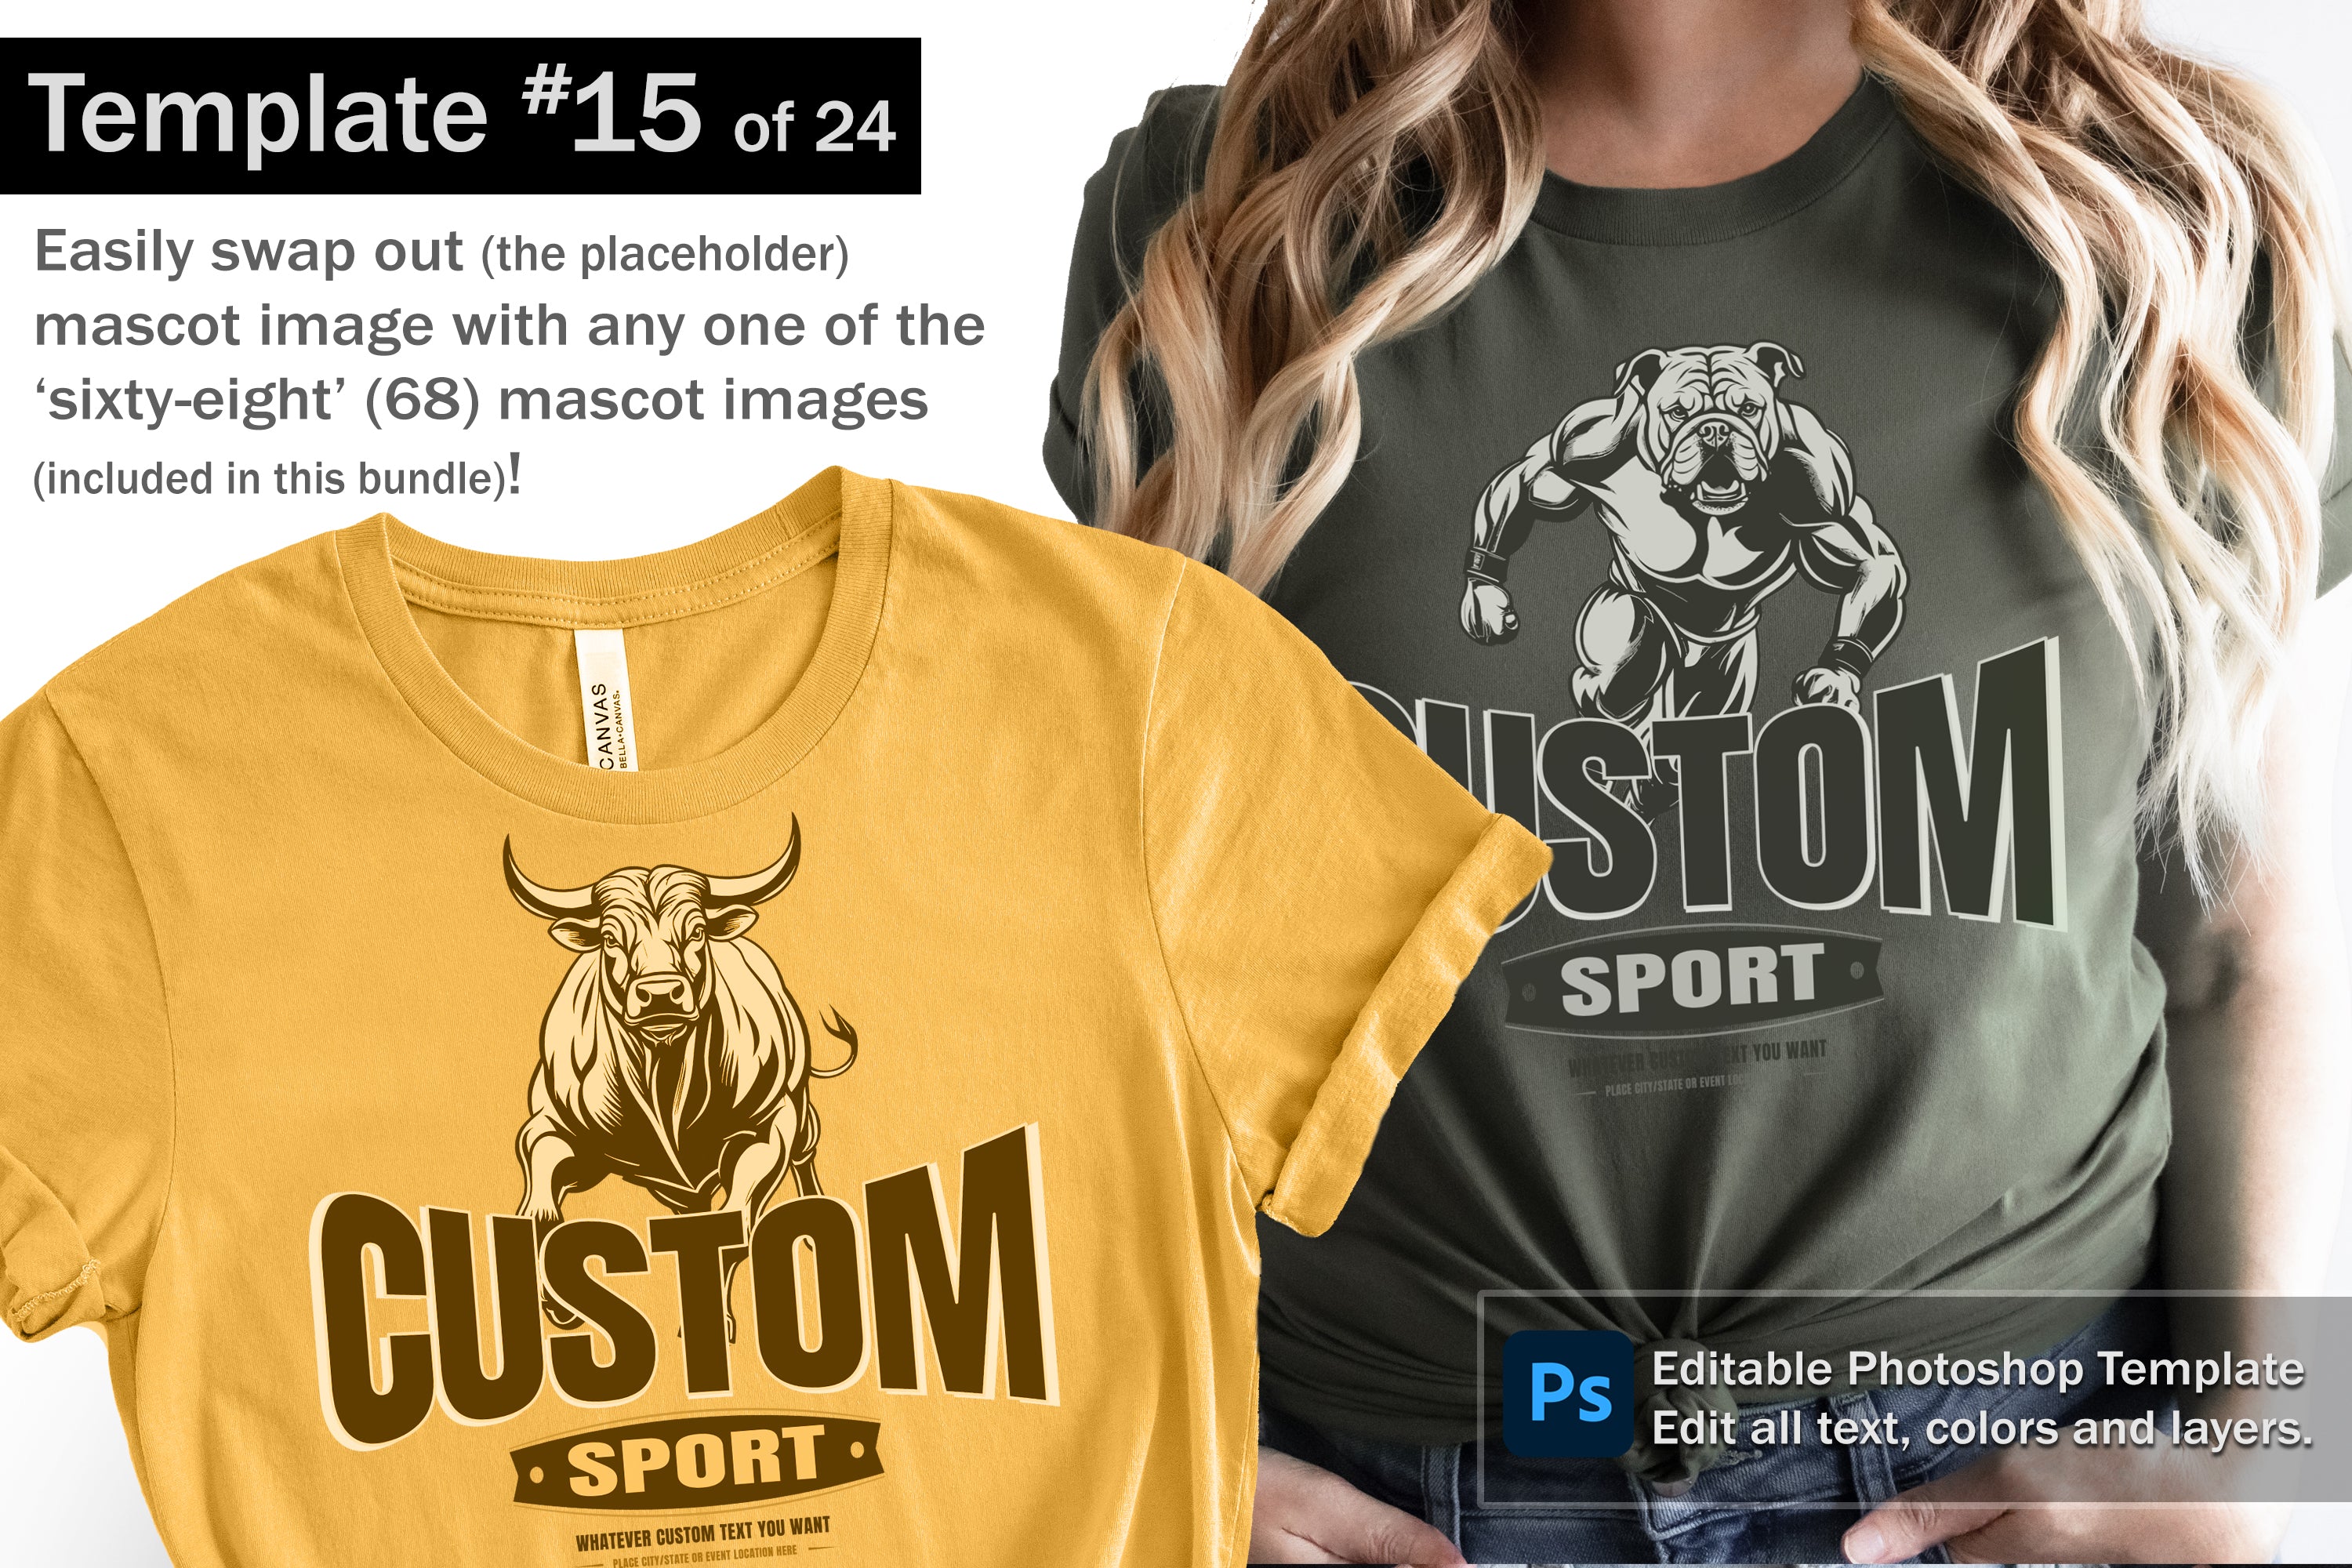 Horse Logo and DIY T-shirt Design Bundle